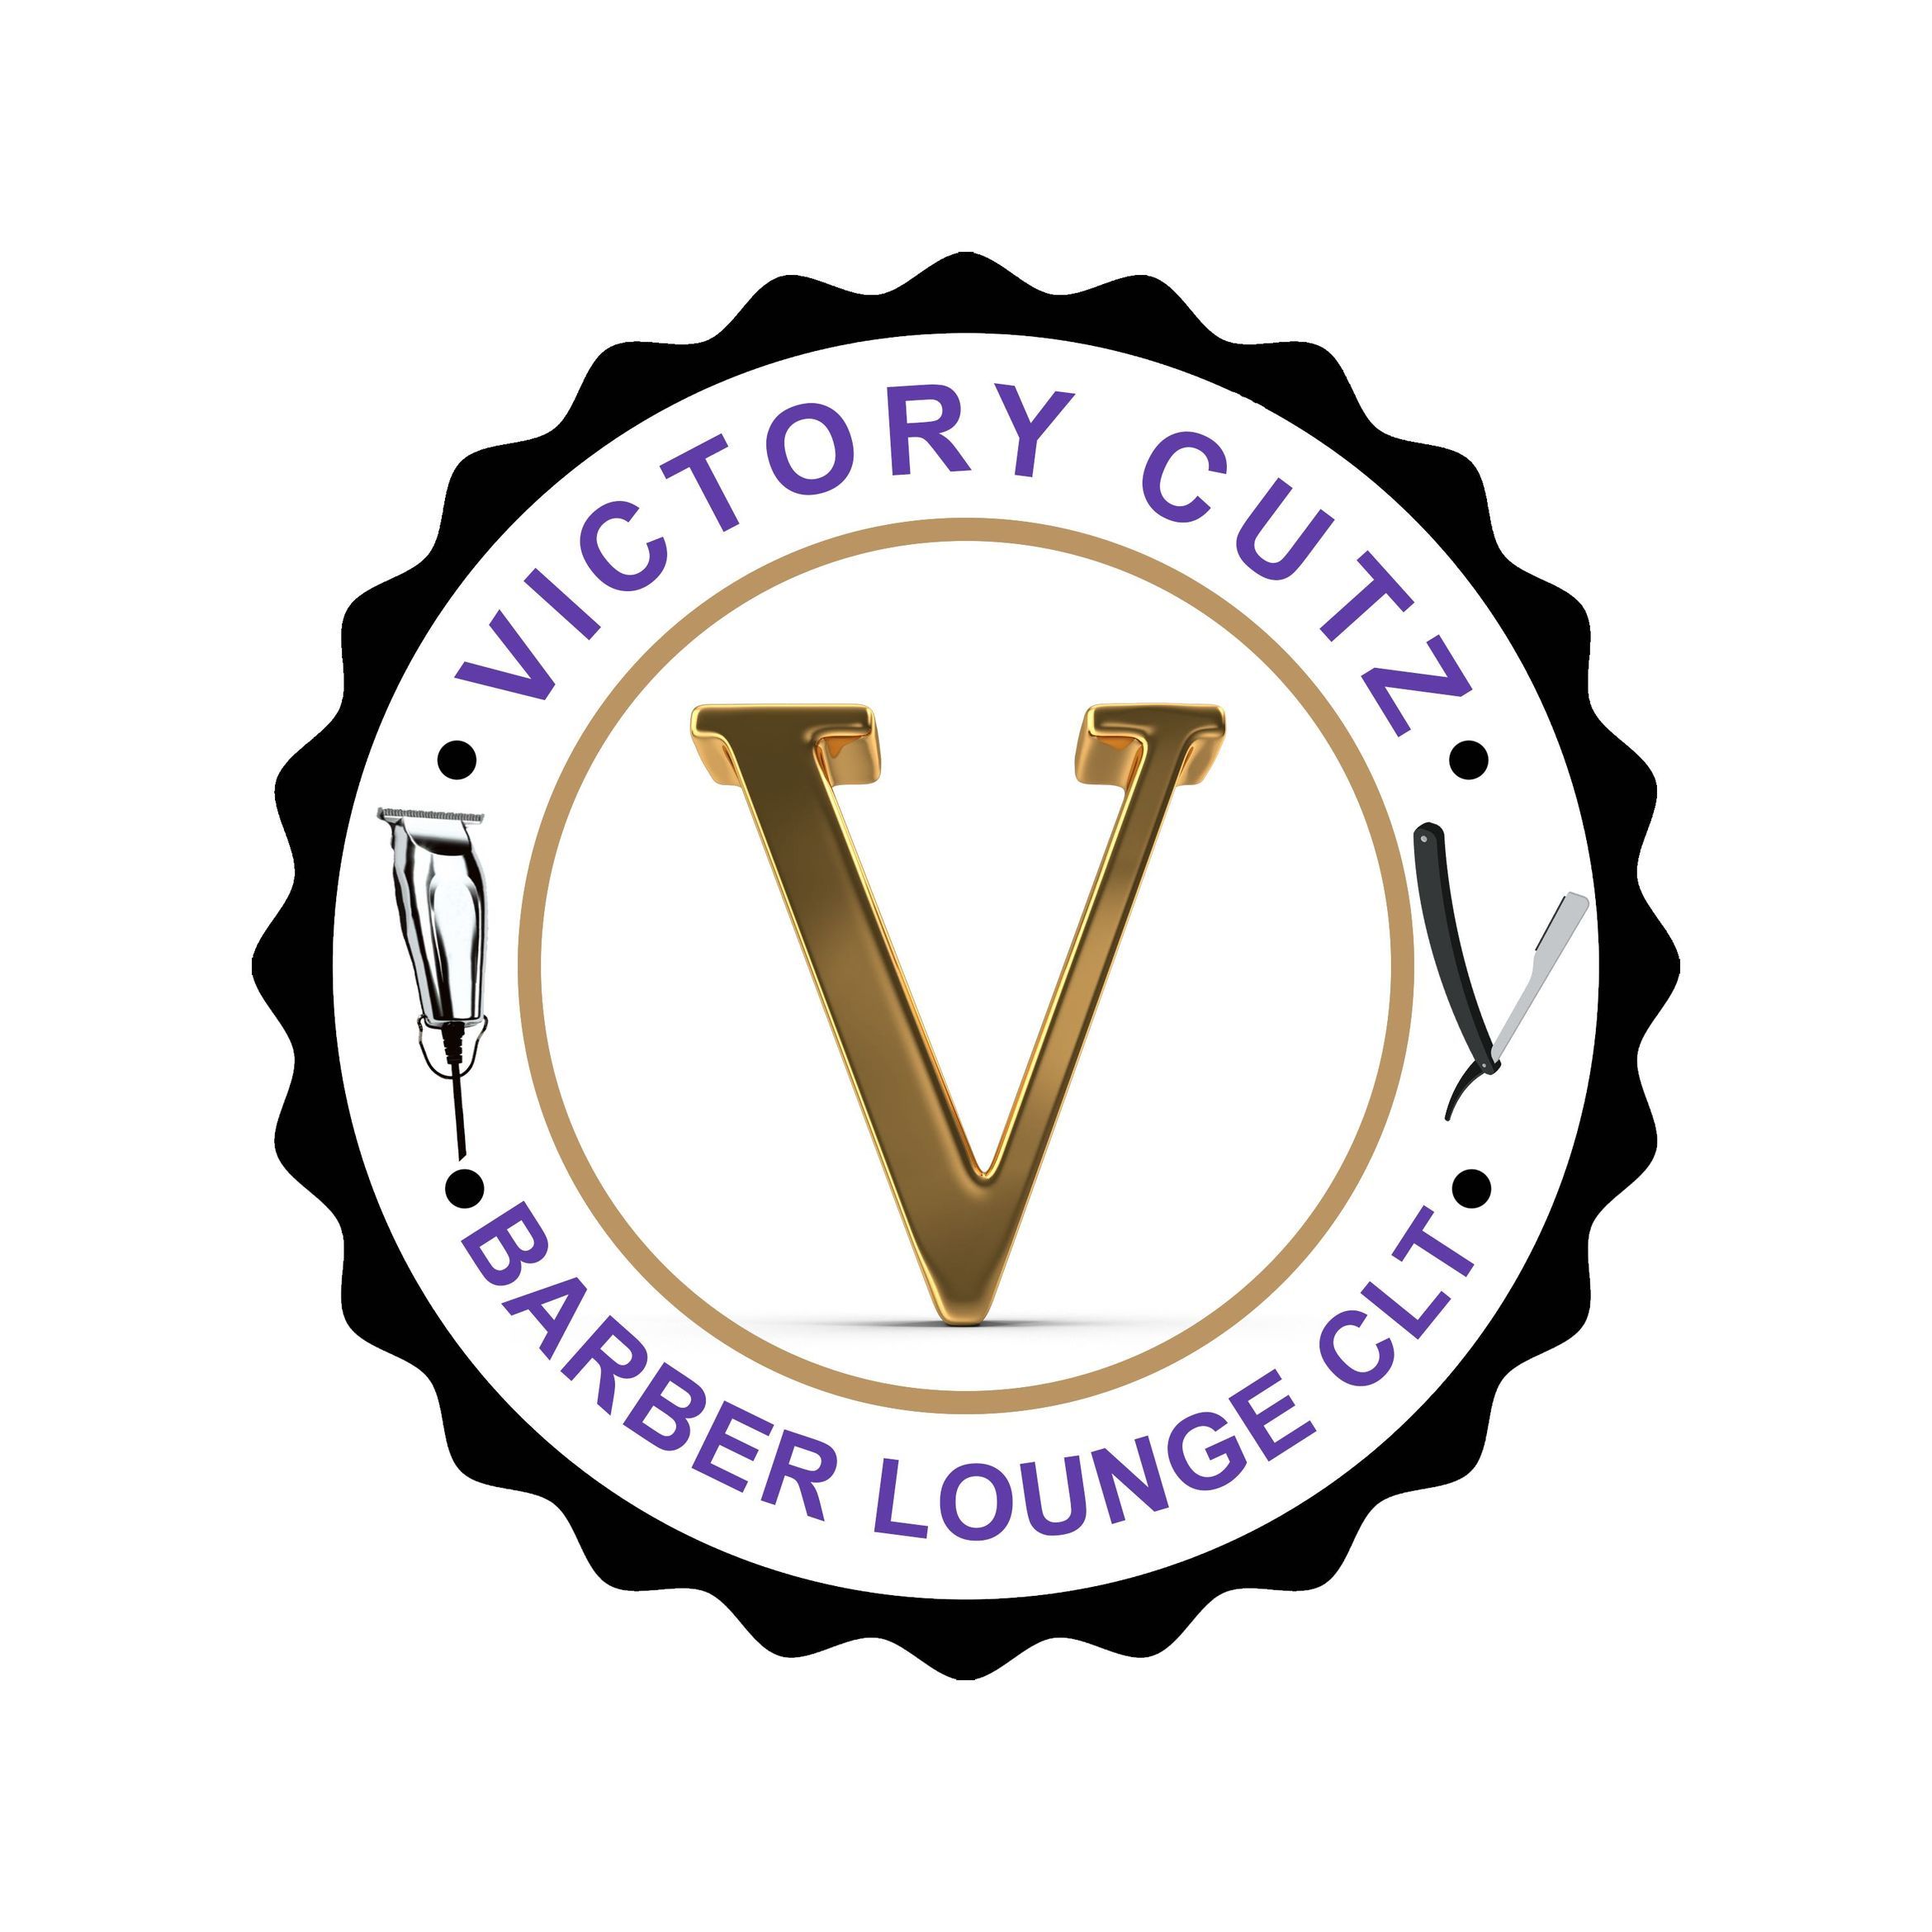 VICTORY CUTZ BARBER LOUNGE CLT, 3110 West Blvd, Suite 1, Charlotte, 28208